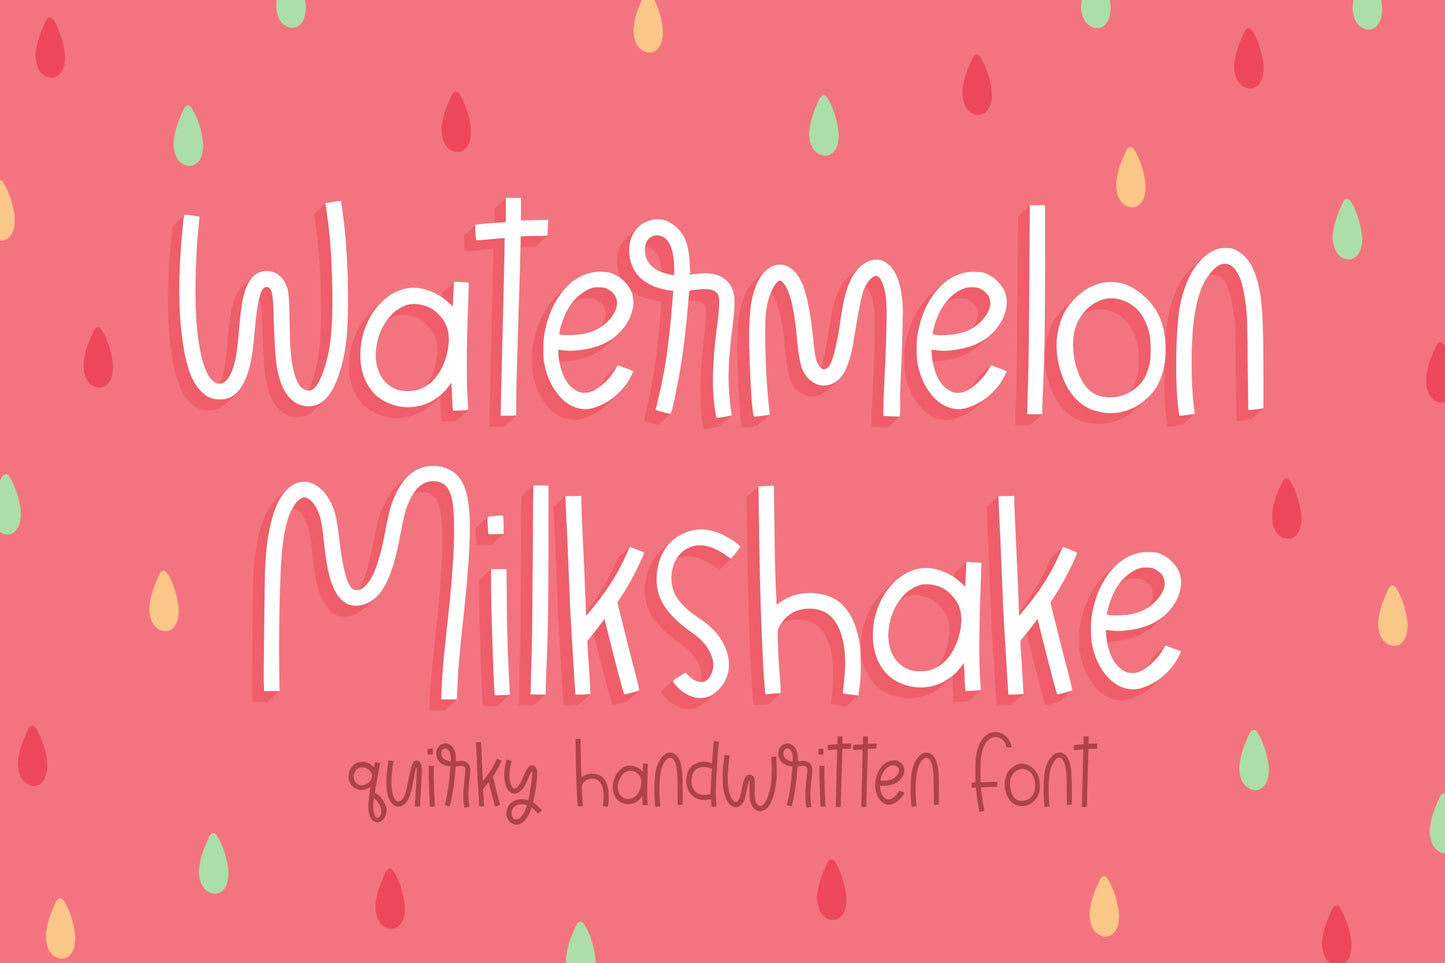 Watermelon Milkshake Handwritten Font